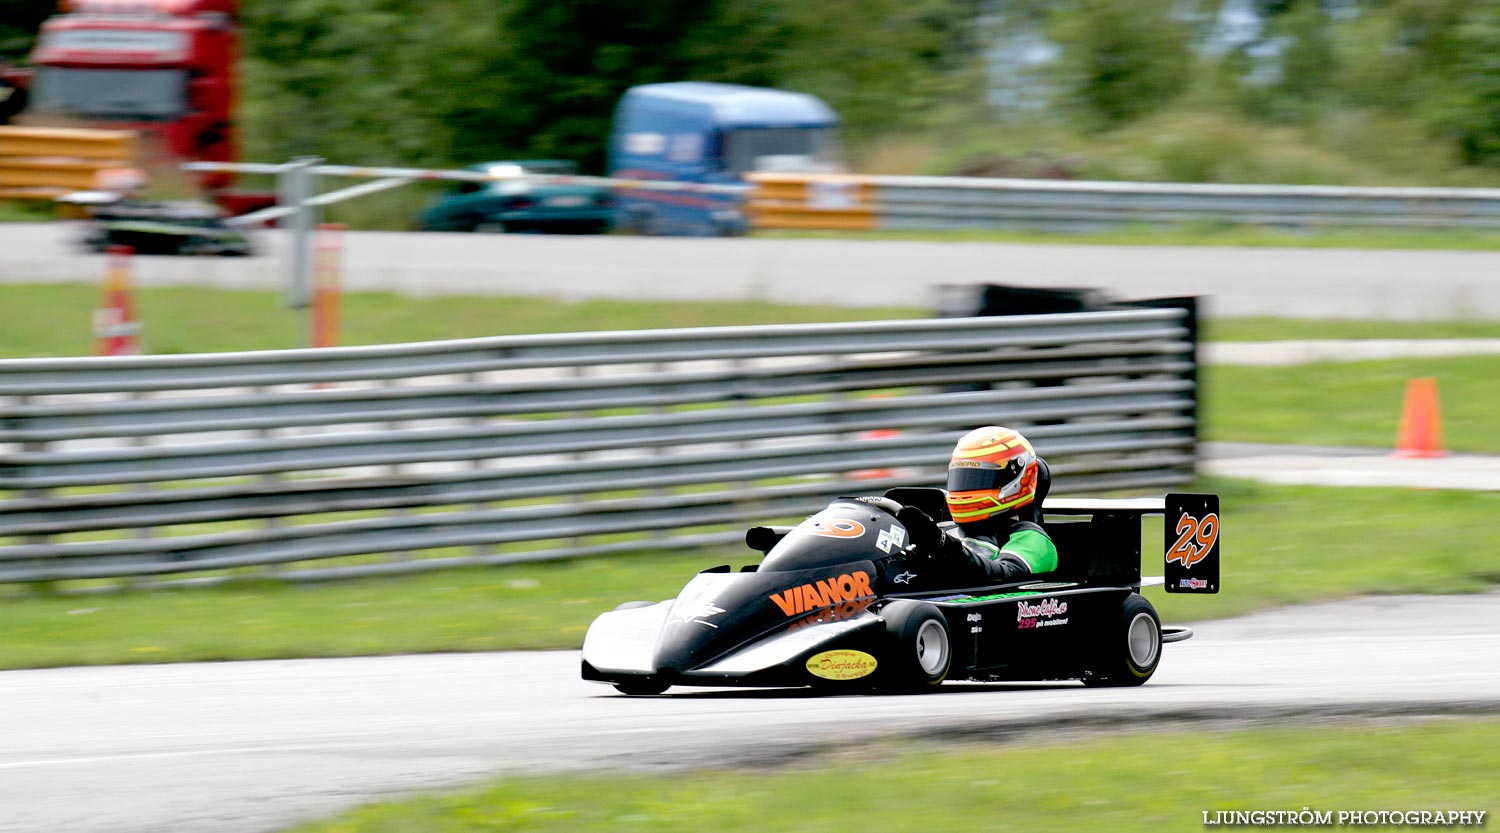 SSK Raceweek,mix,Kinnekulle Ring,Götene,Sverige,Motorsport,,2009,107640